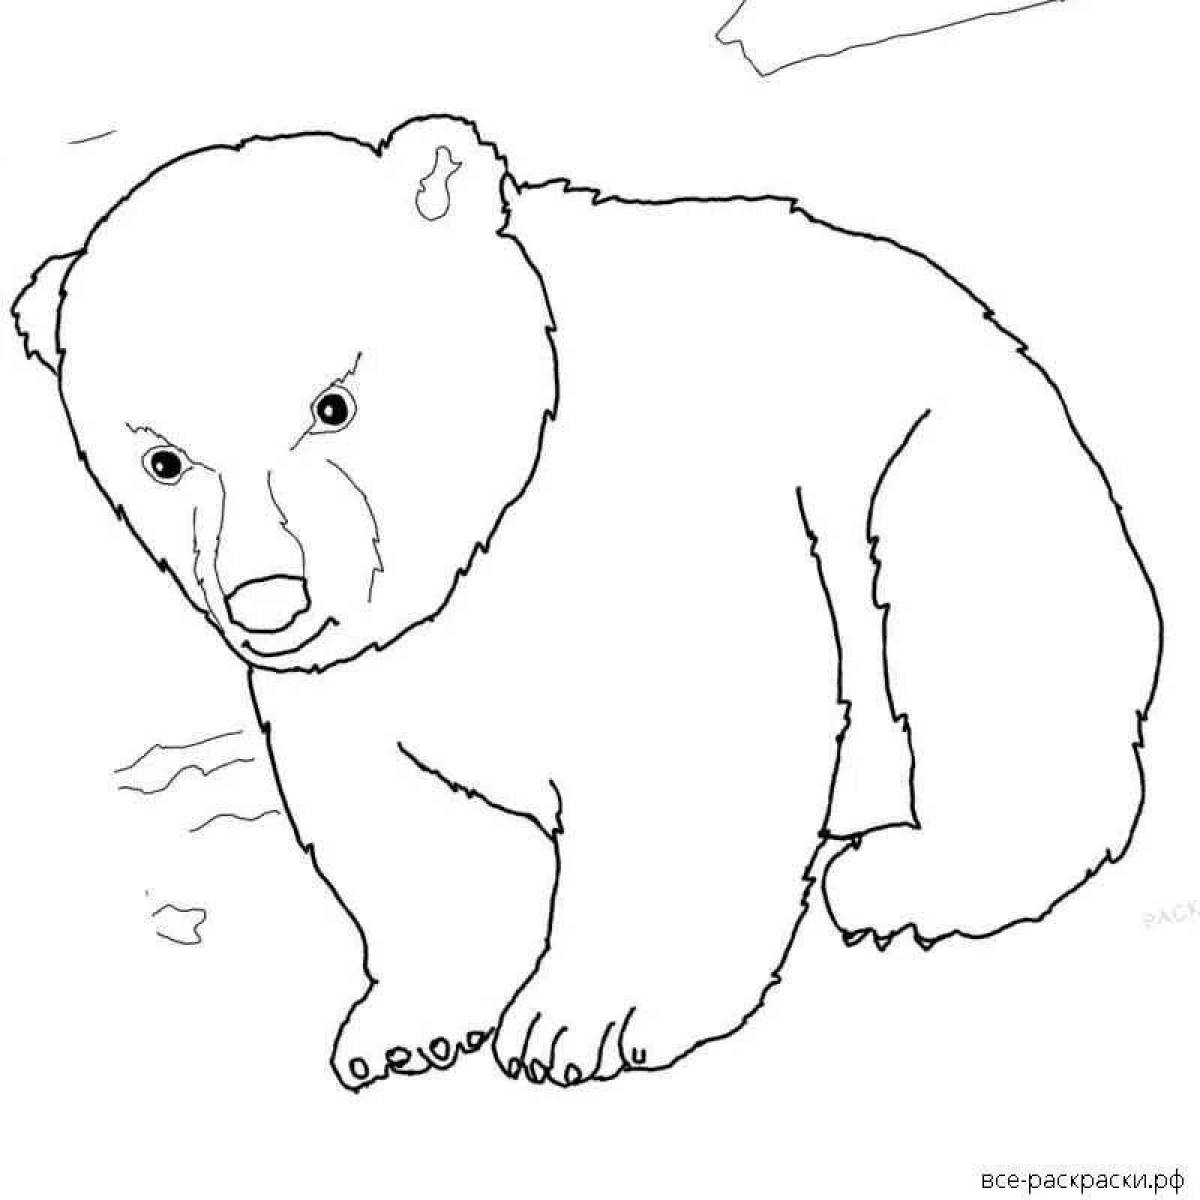 Cute white teddy bear coloring book